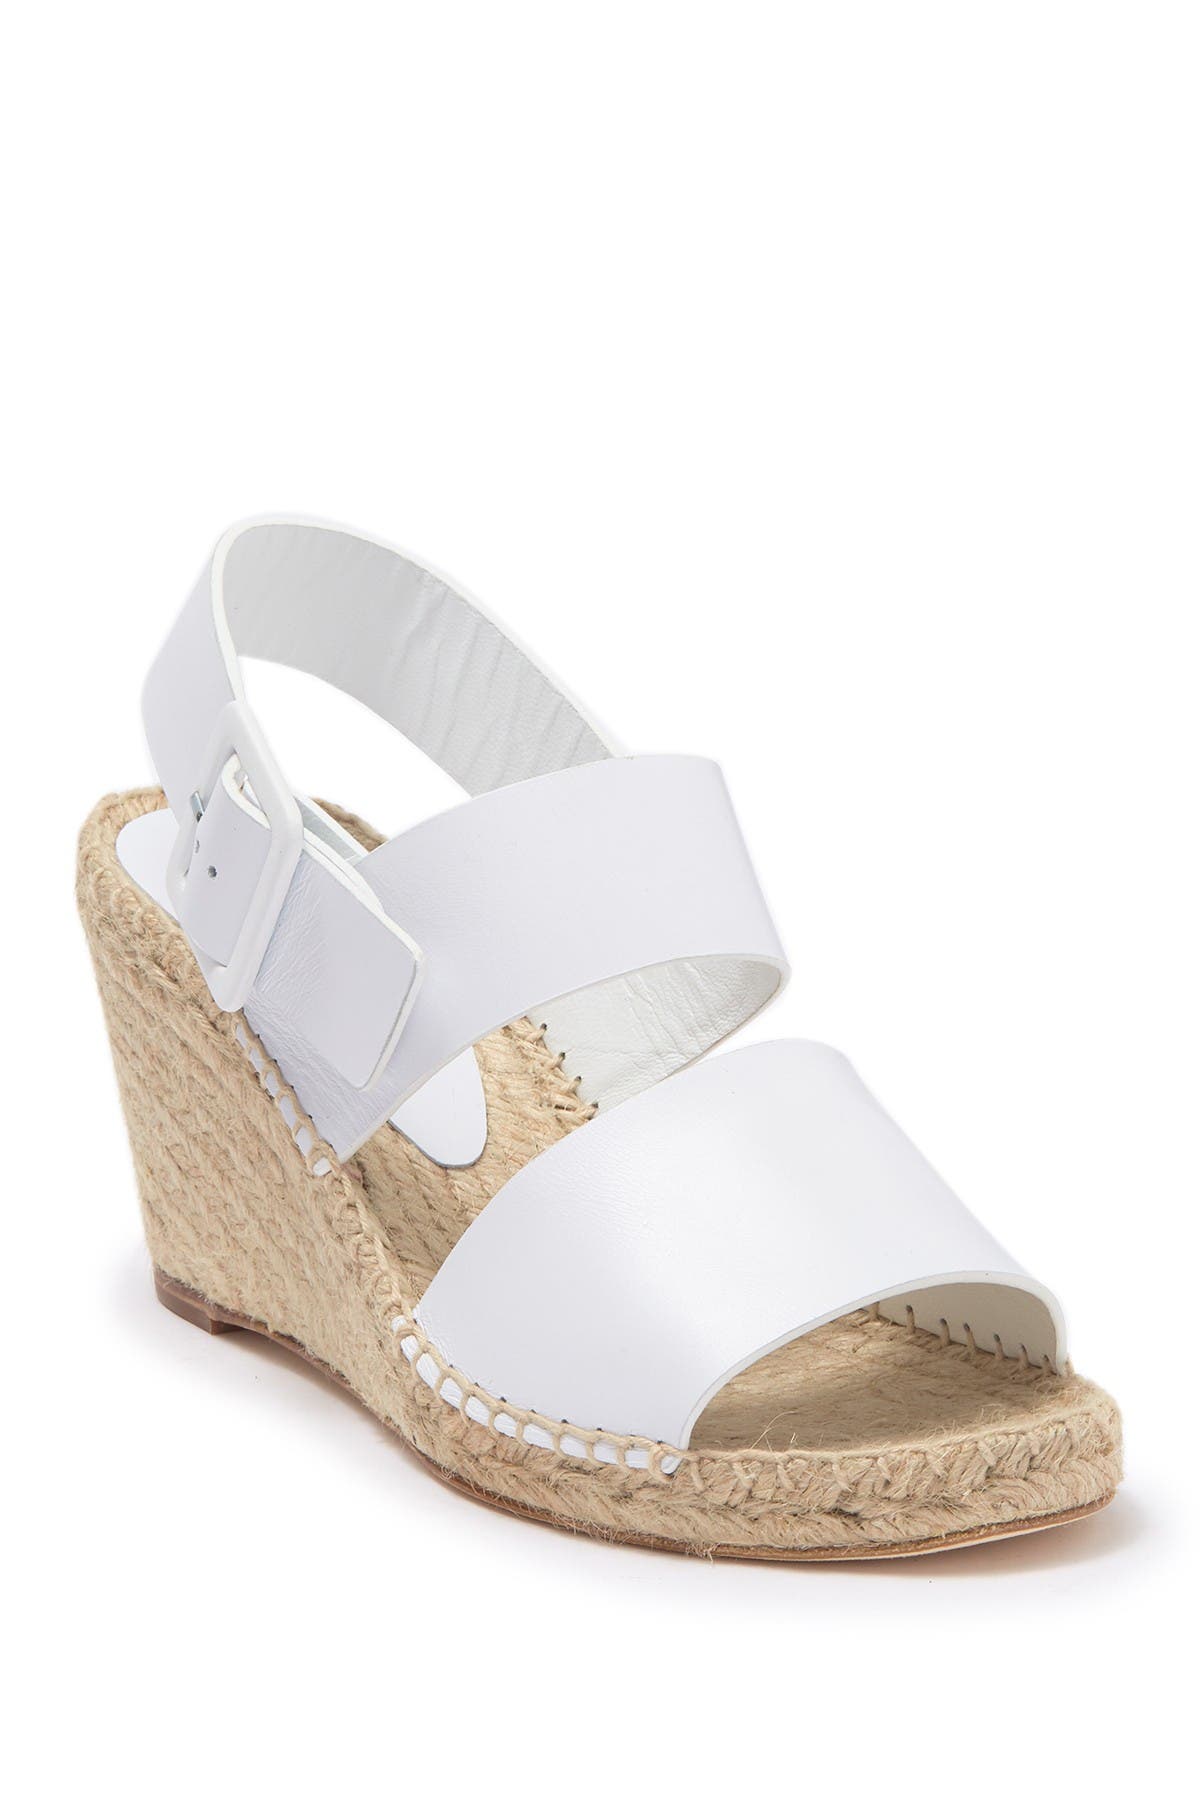 Paloma Barceló Matsuko Espadrille Leather Wedge Sandal In White | ModeSens